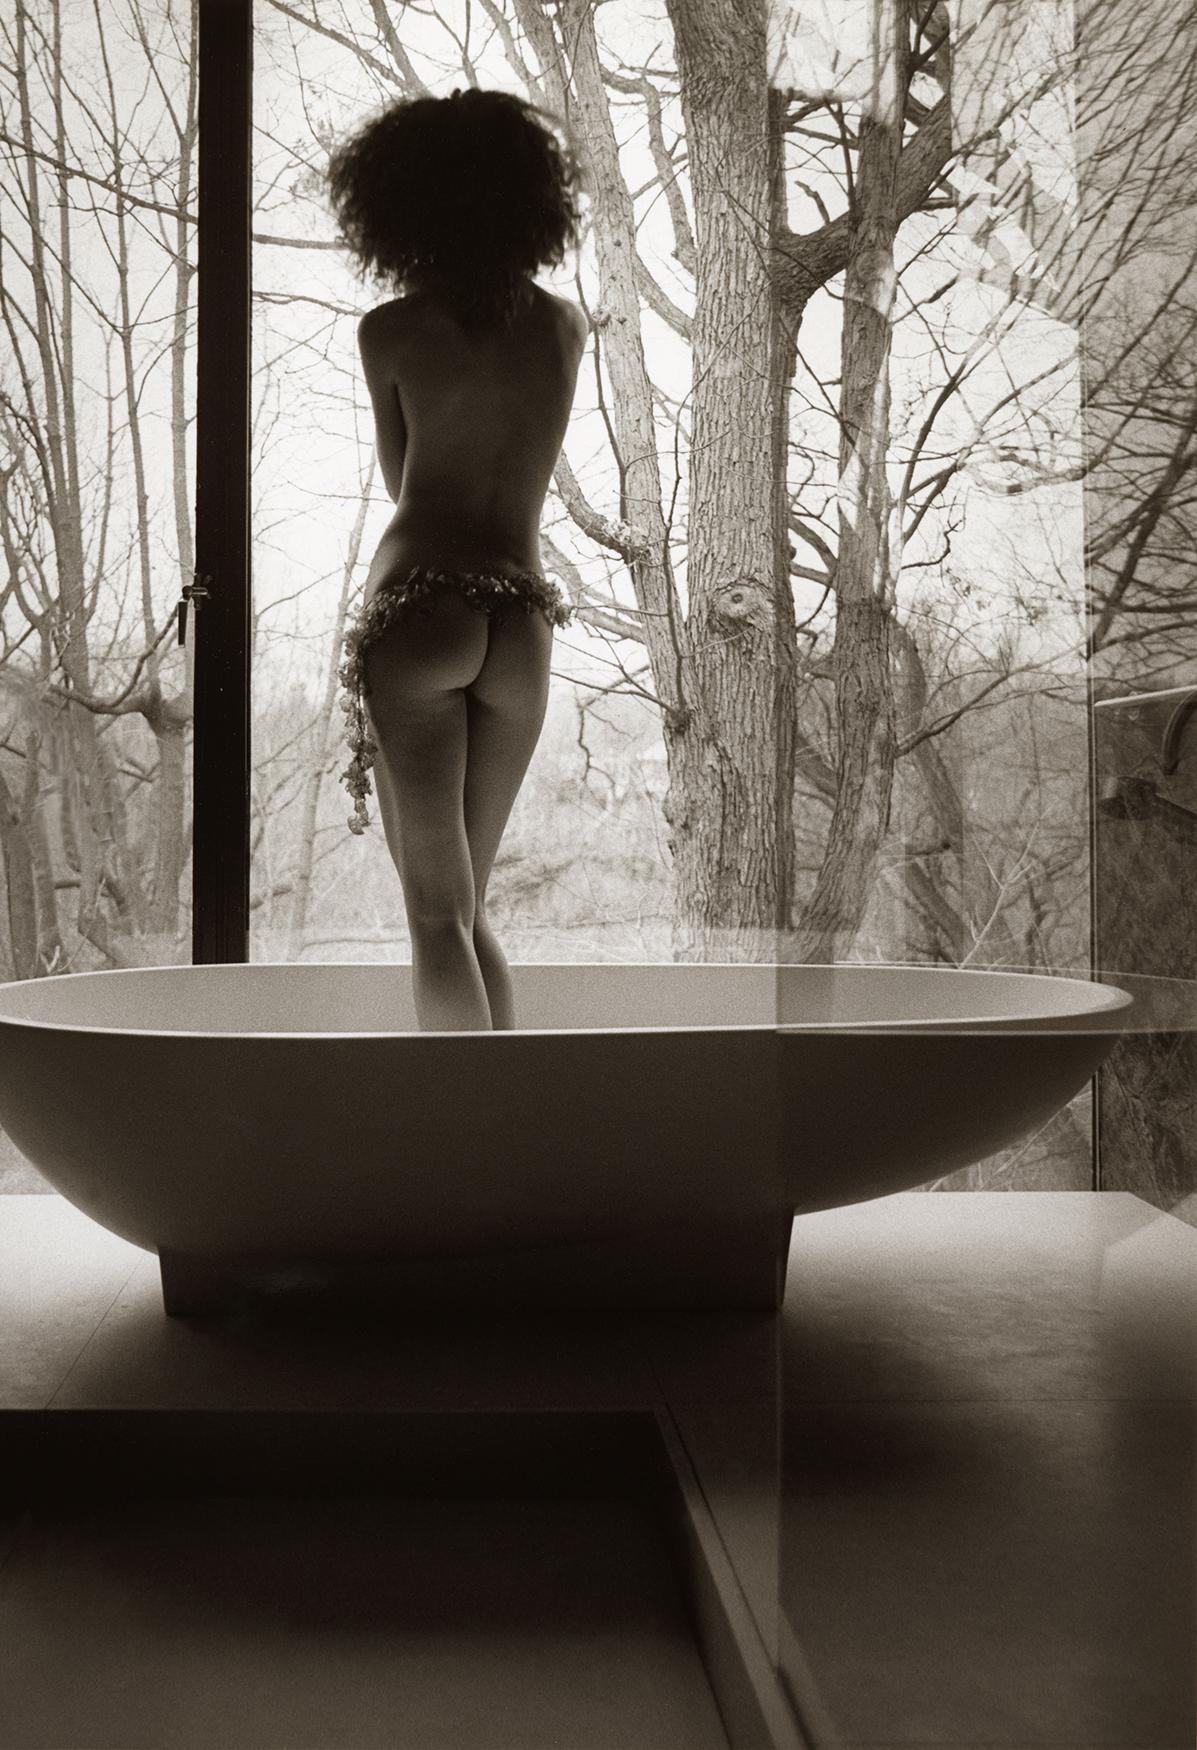 Ron Baxter Smith Nude Photograph - Yabu / Pushelberg Home - B+W Nude in Nub, 2003.